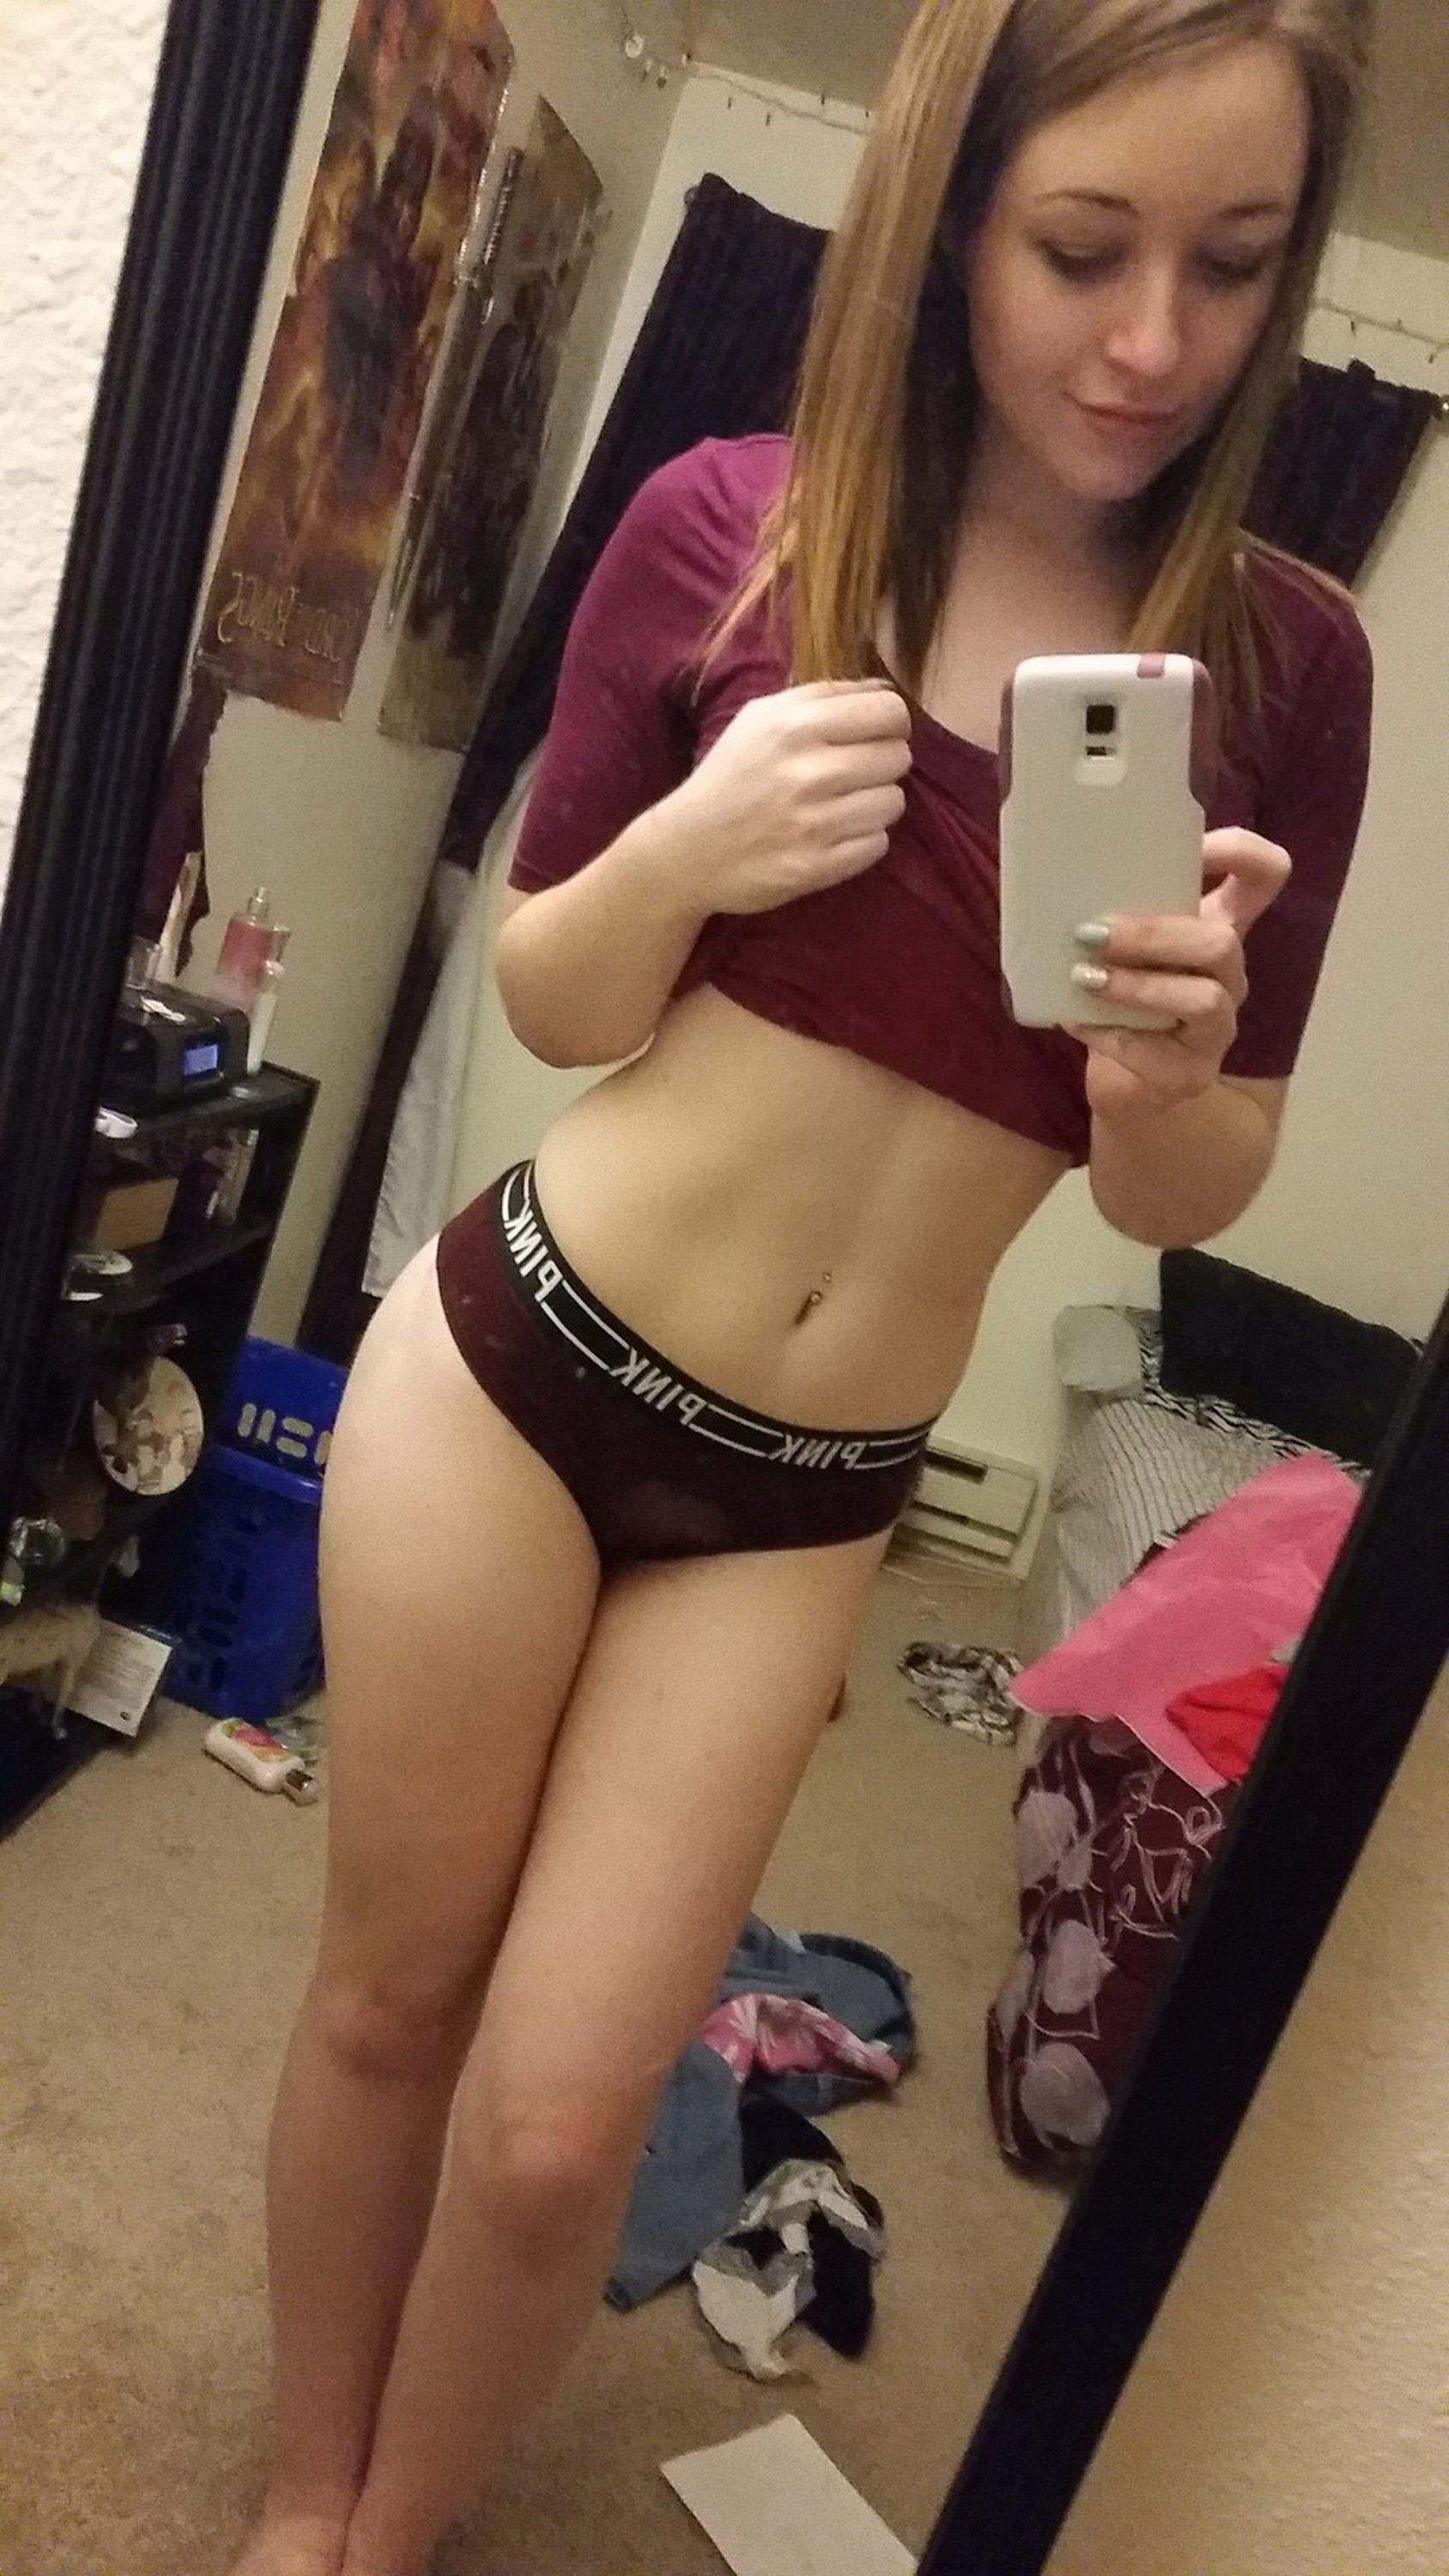 Skinny brunette nude selfie - Porn archive